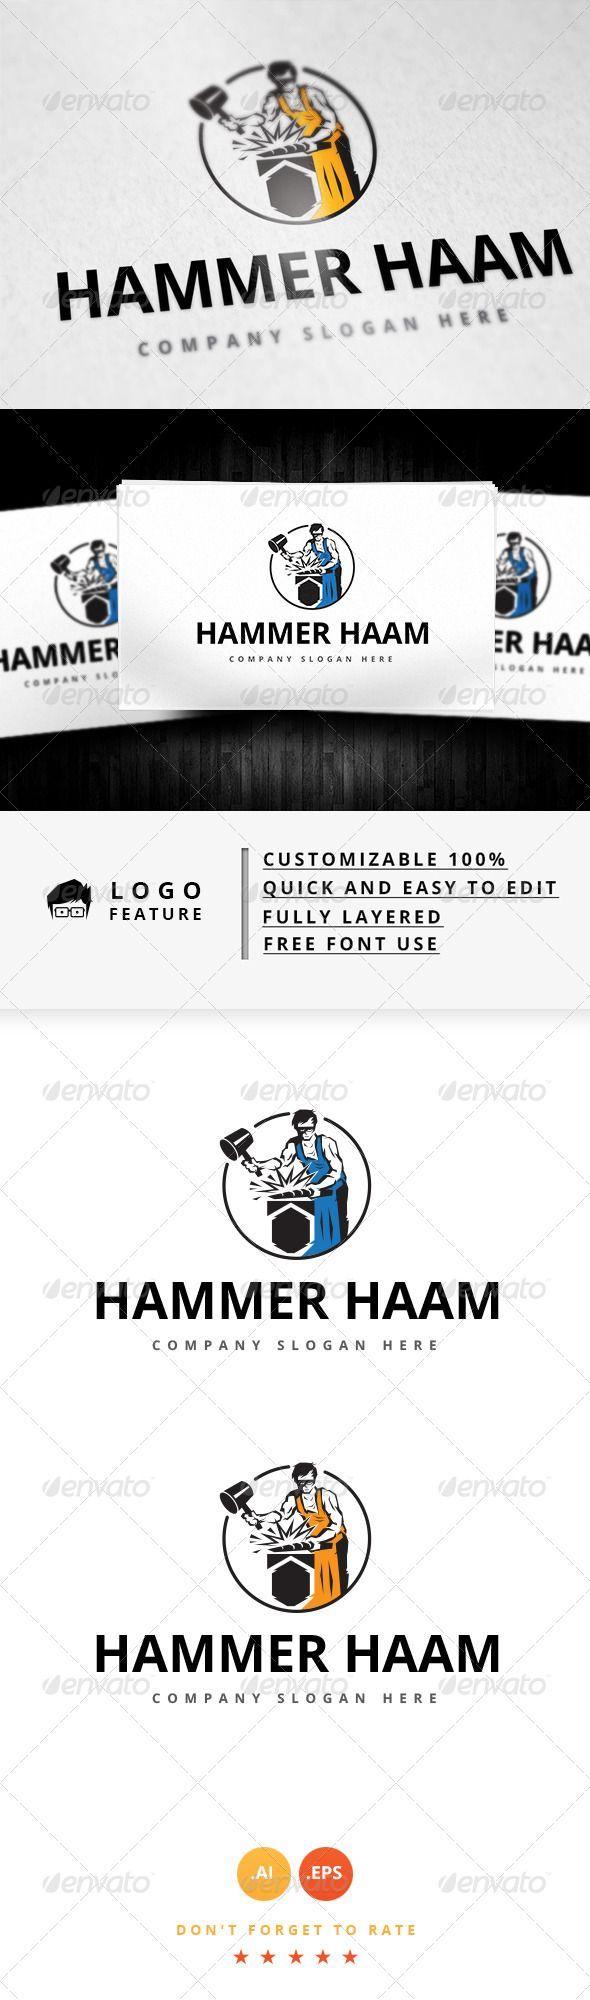 Haam Logo - Hammer Haam Logo http://graphicriver.net/item/hammer-haam-logo ...